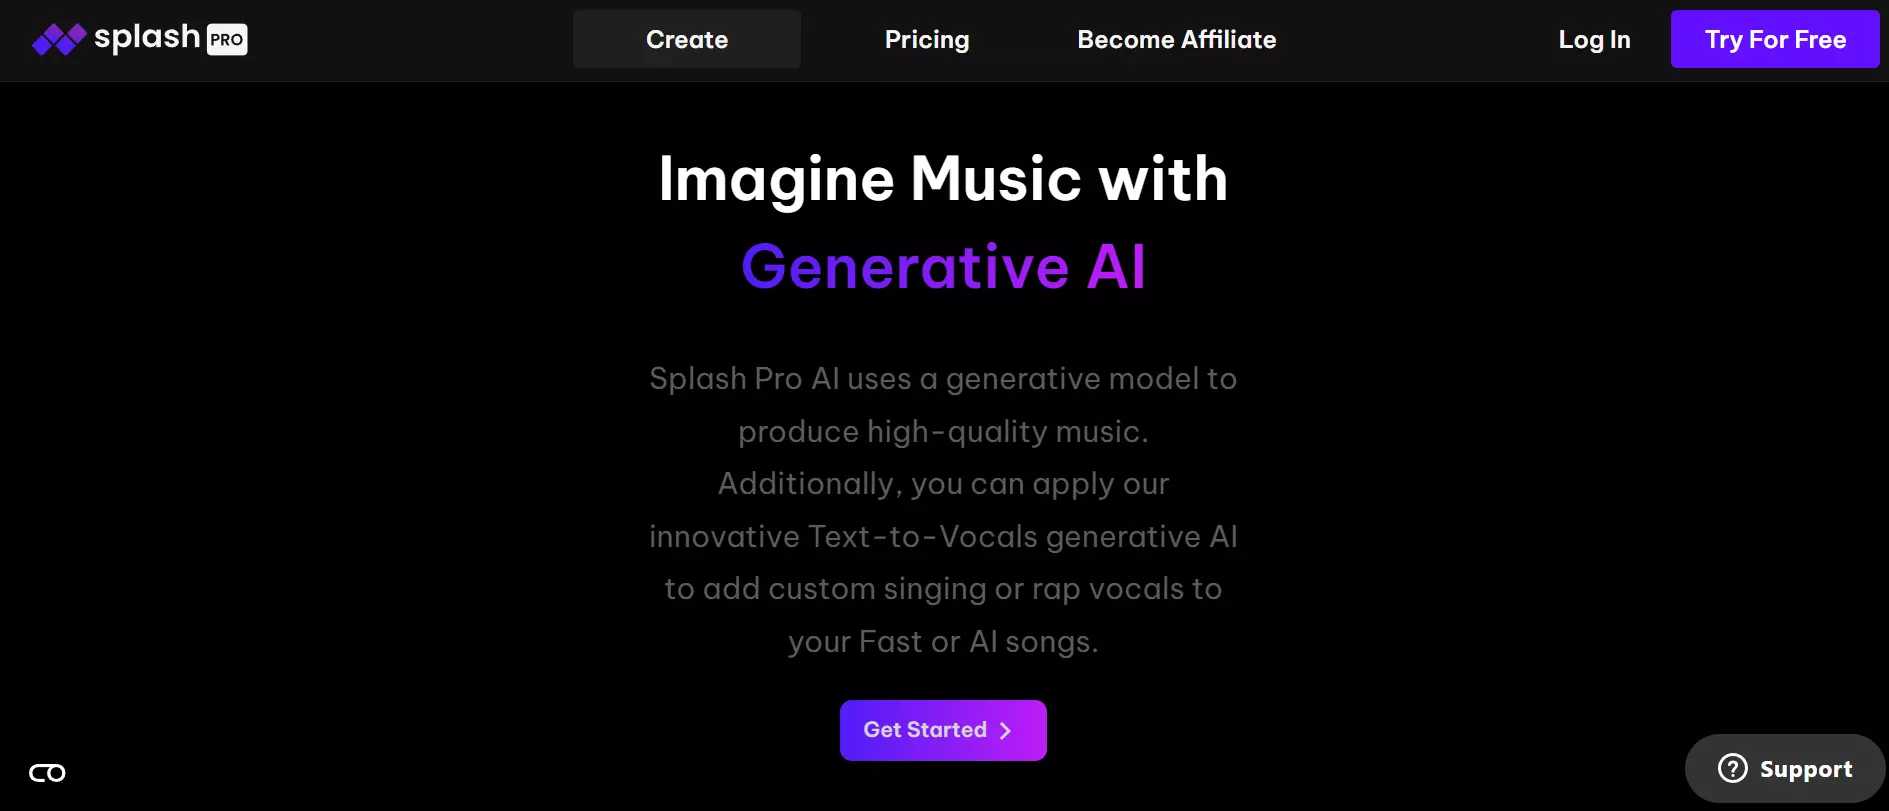 Splash pro AI tool used to generate music using ai